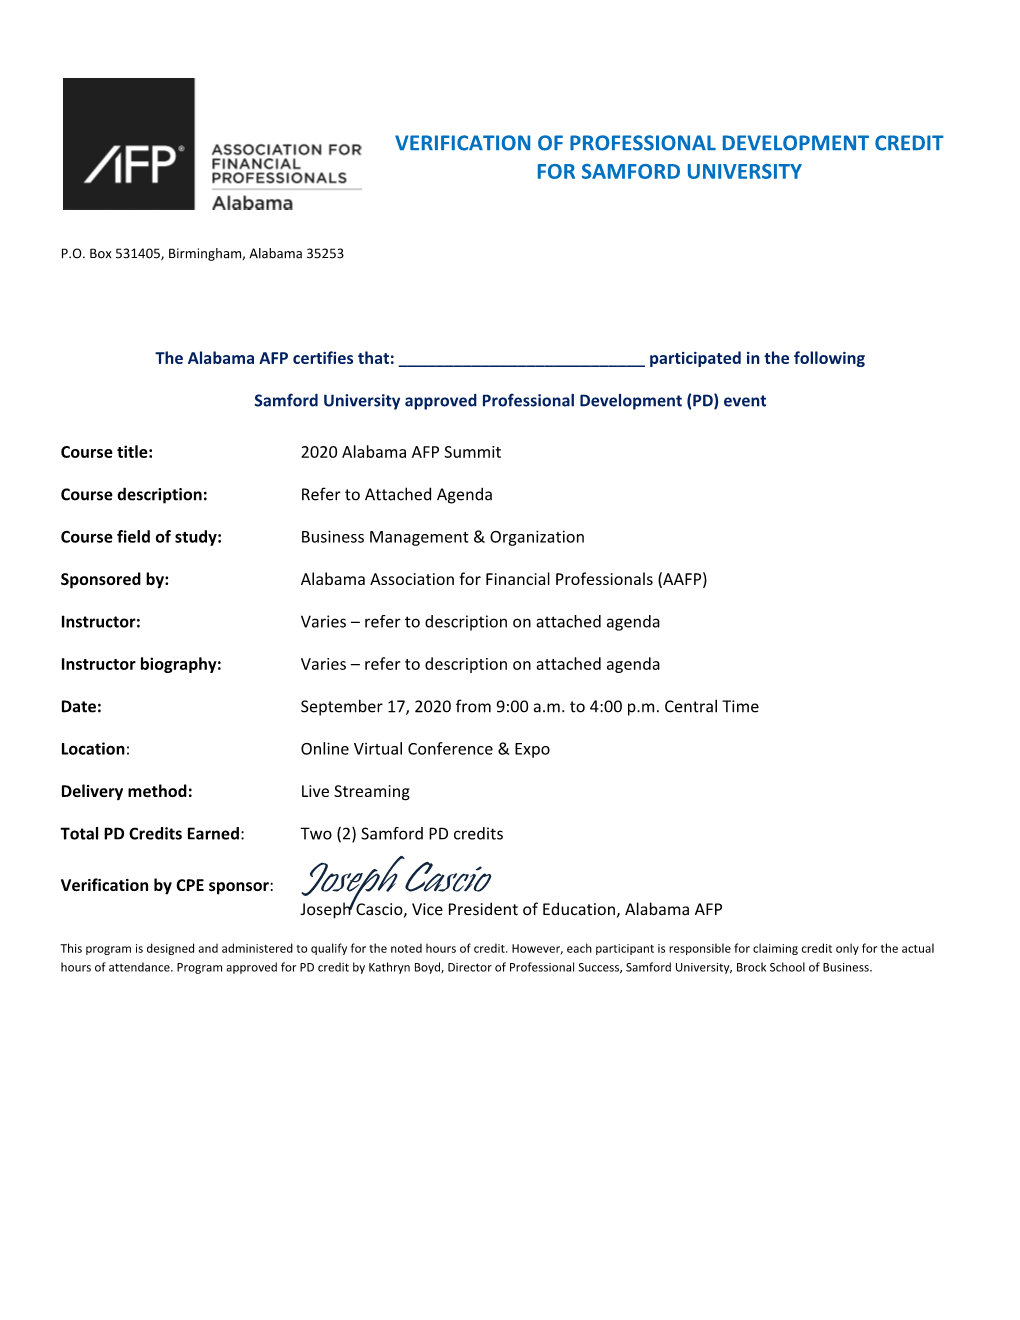 Verification of Professional Development Credit for Samford University